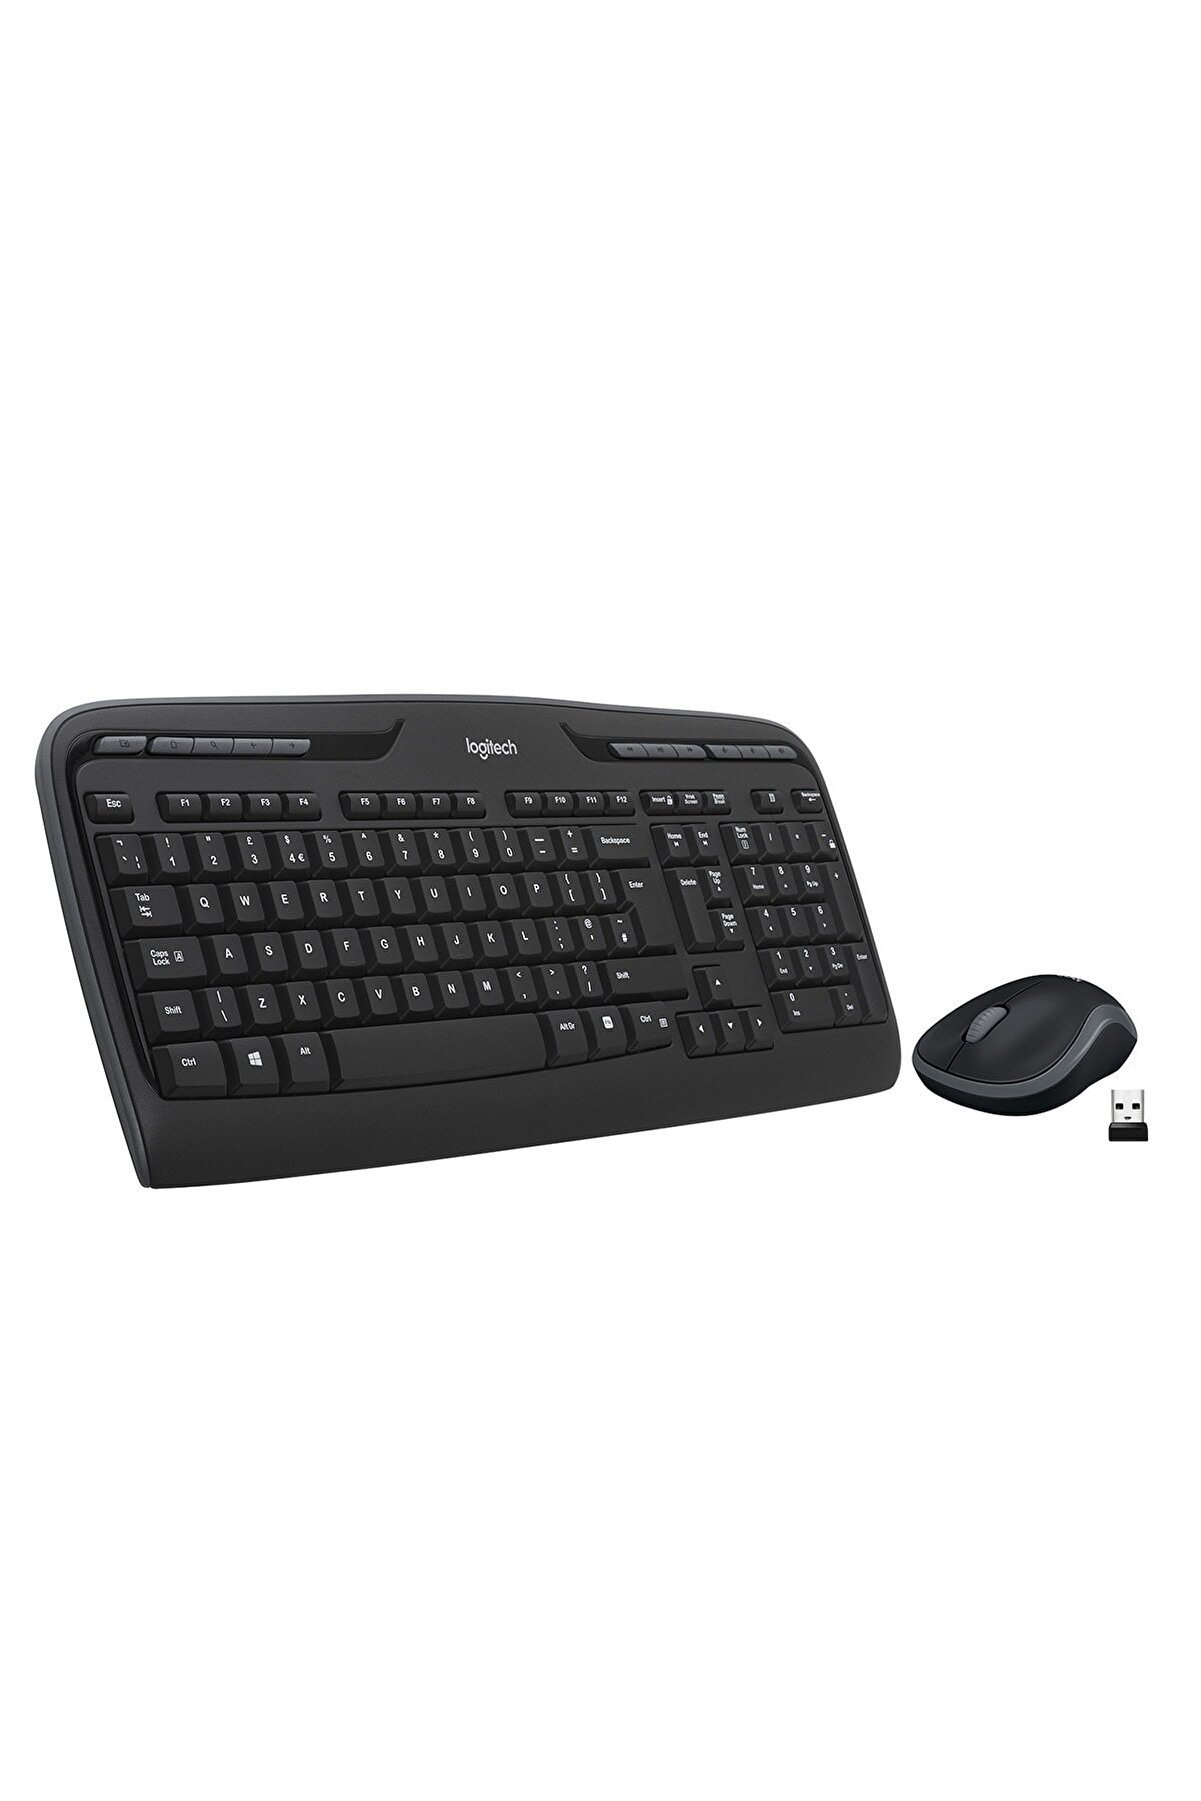 logitech MK330 Kablosuz Türkçe Klavye Mouse Seti - Siyah